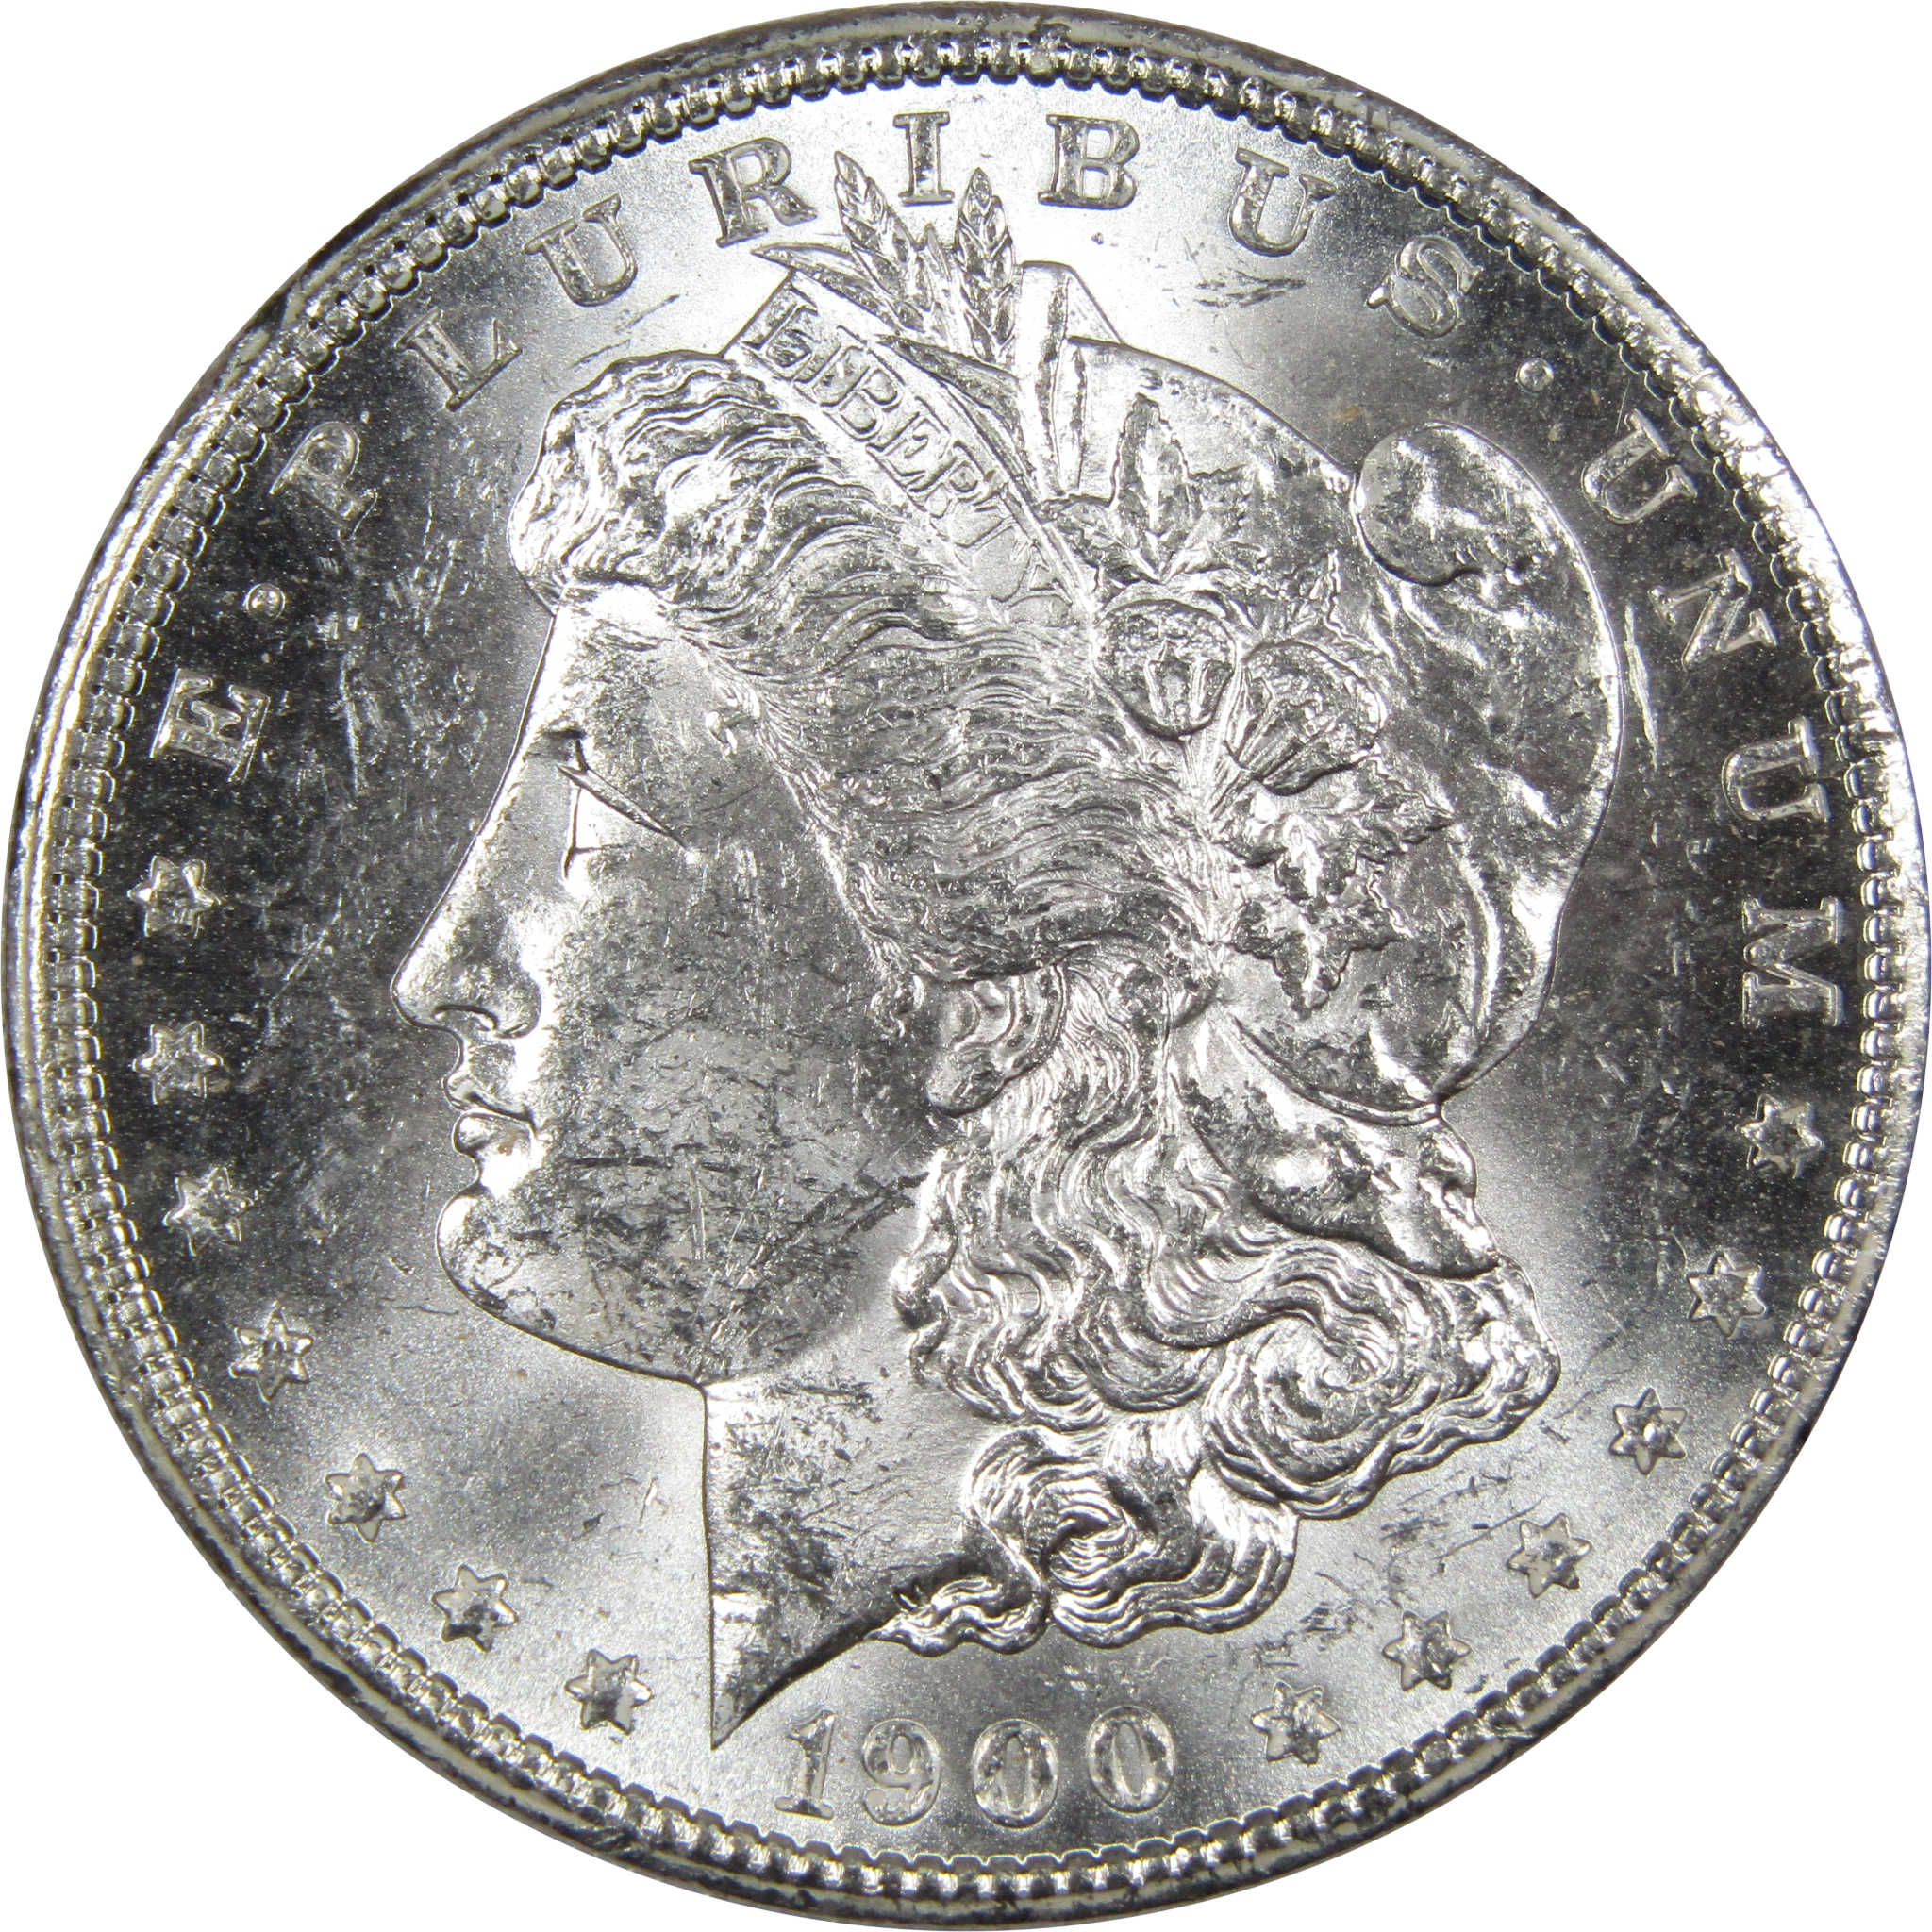 1900 O Morgan Dollar BU Uncirculated Mint State 90% Silver SKU:IPC9787 - Morgan coin - Morgan silver dollar - Morgan silver dollar for sale - Profile Coins &amp; Collectibles